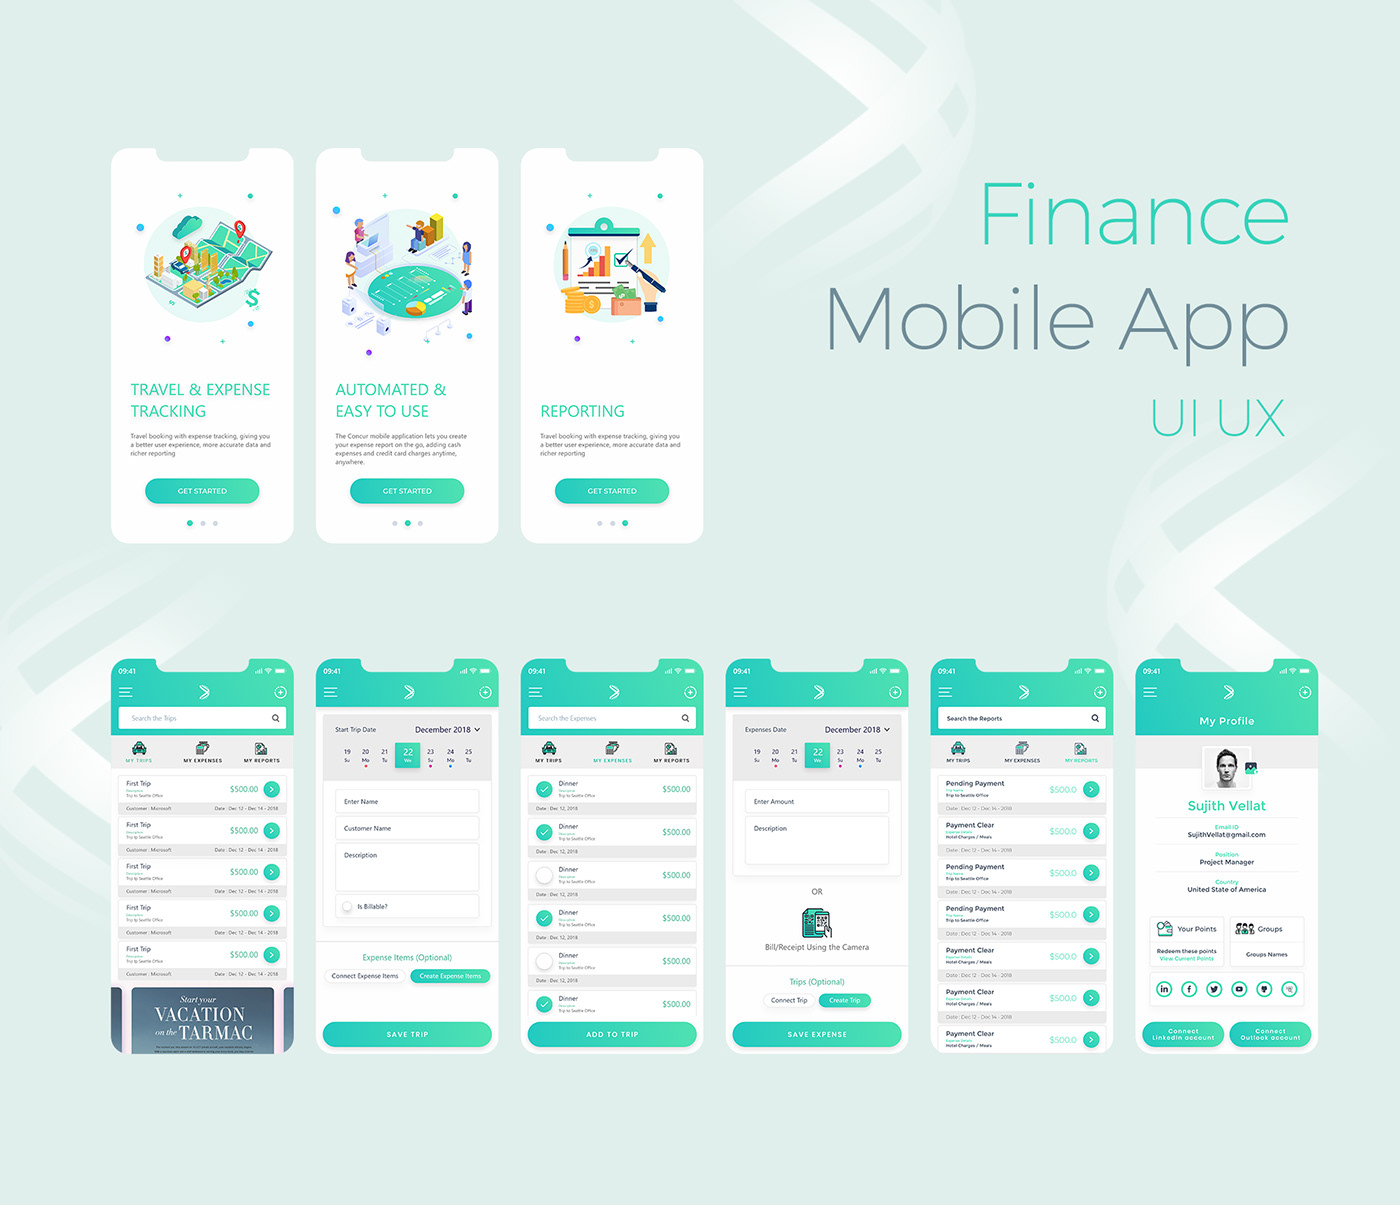 Finance Mobile Ap